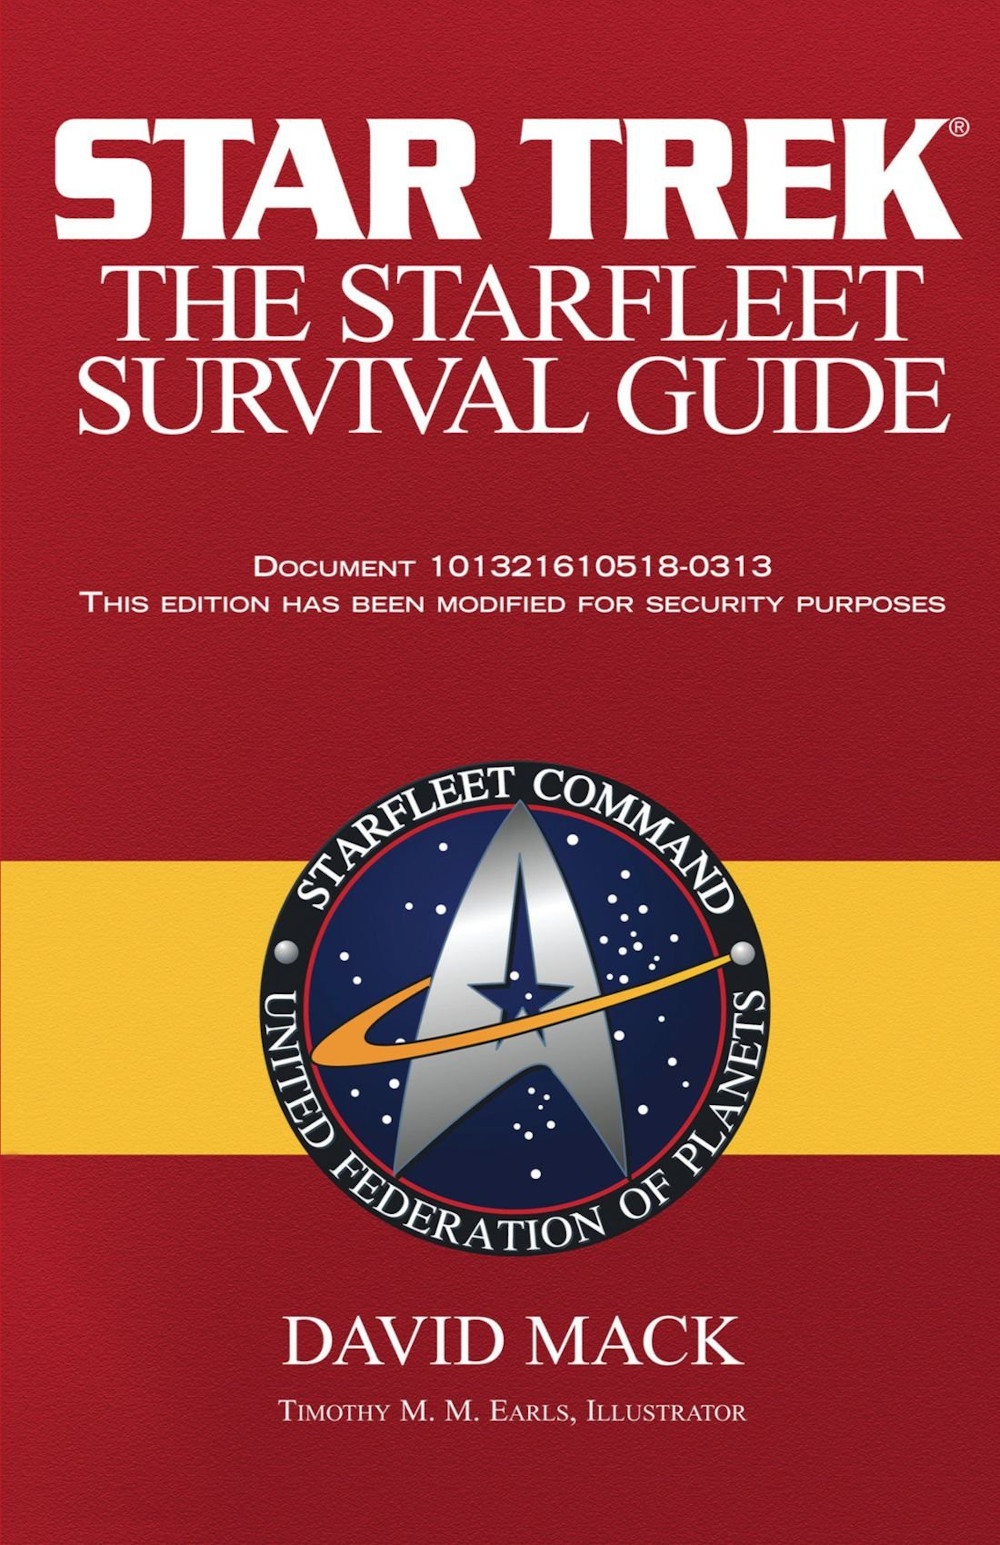 Starfleet Survival Guide (Sep 2002)